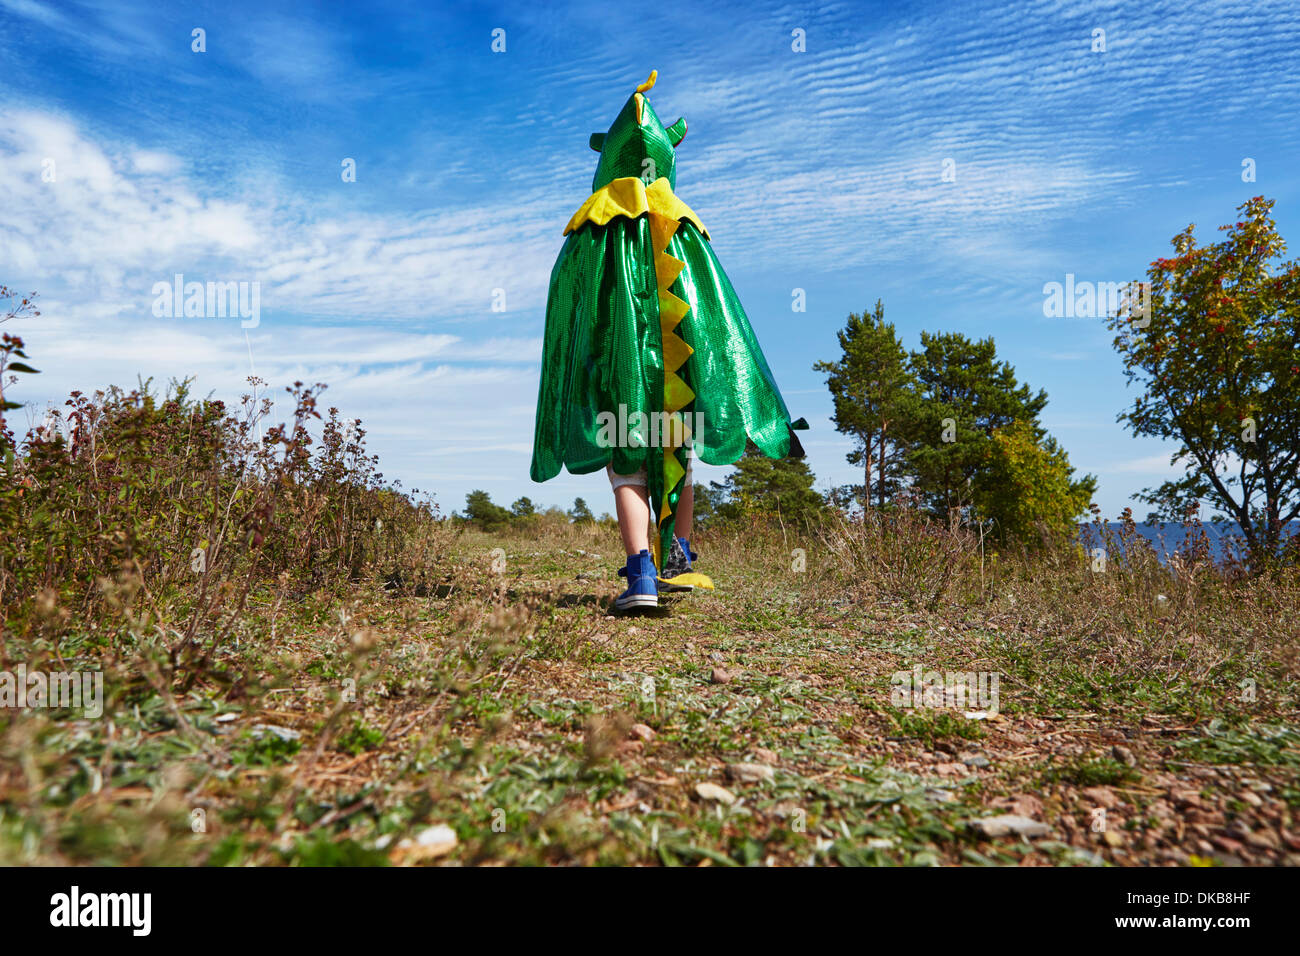 Boy wearing green cape walking along grass, Eggergrund, Sweden Stock Photo